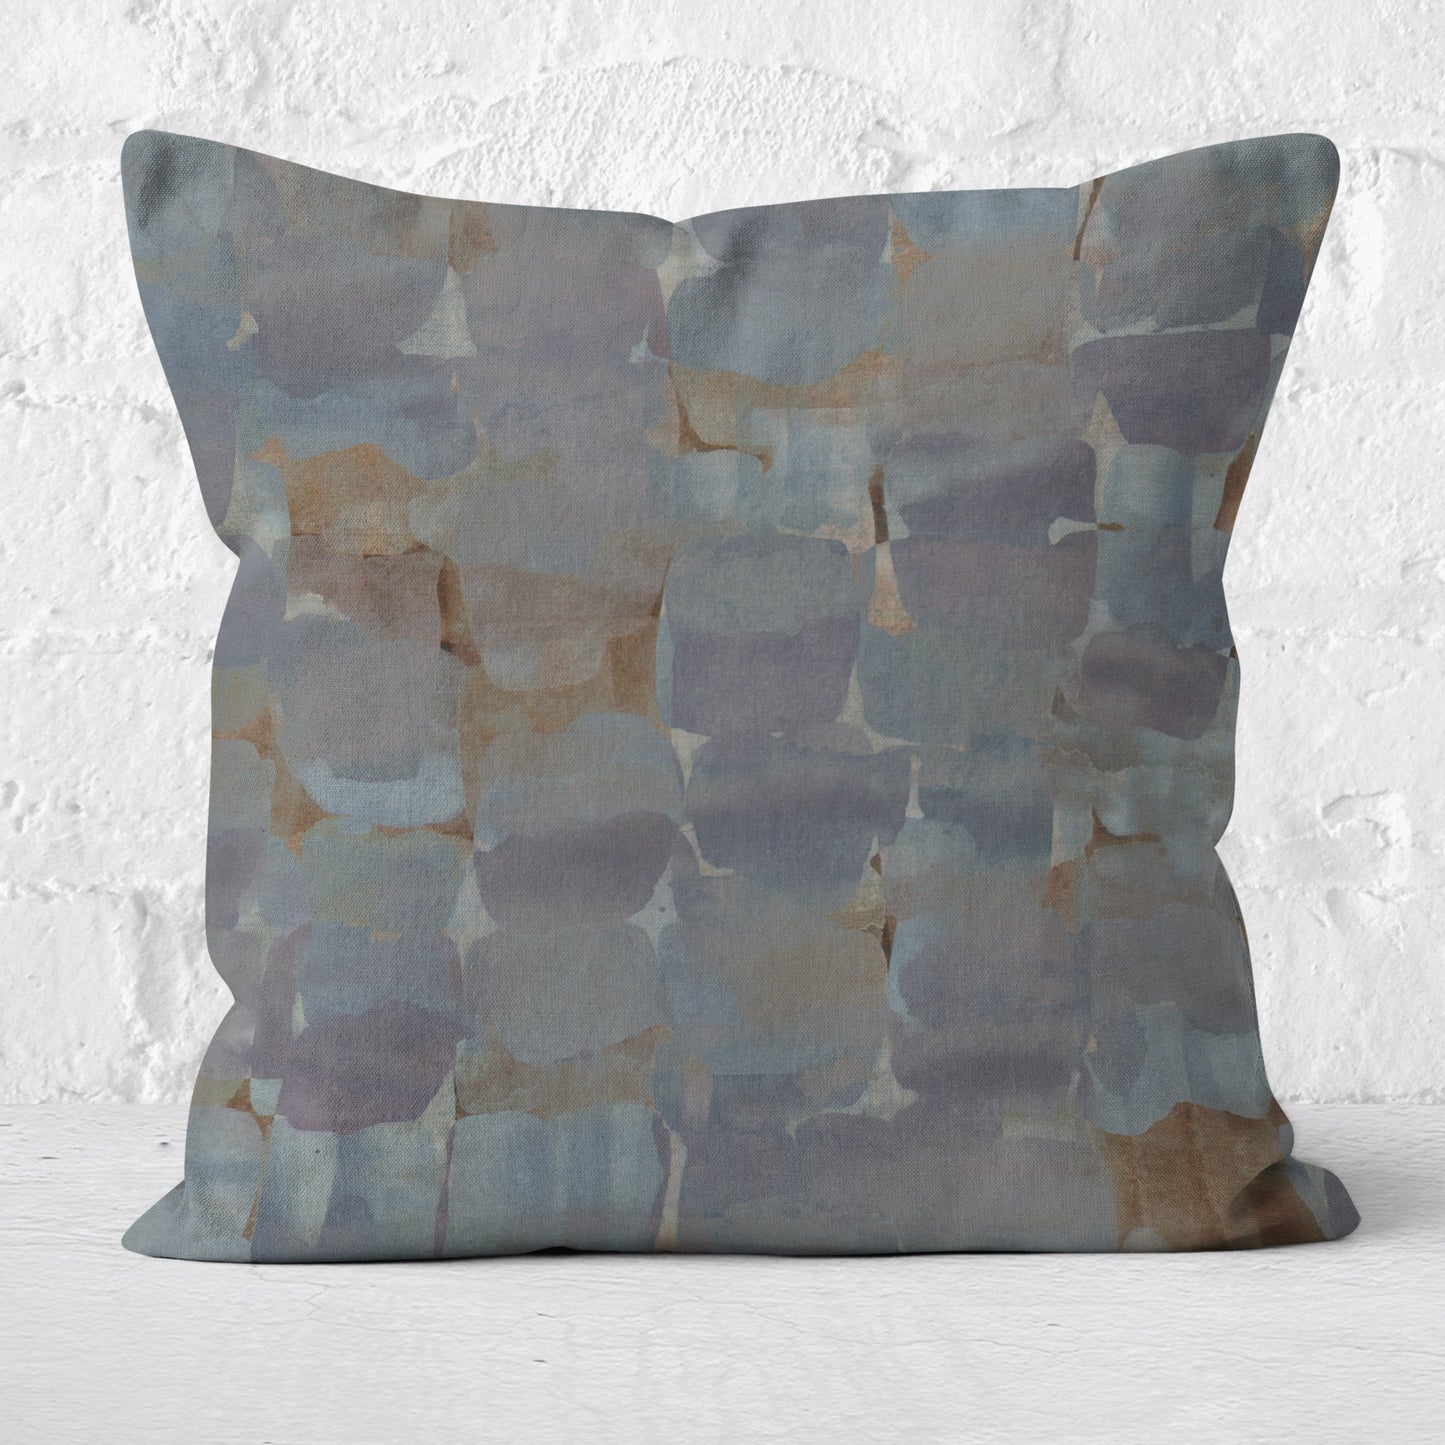 SAMPLE - 18x18 River Rocks Gray Cotton Canvas Pillow Cover